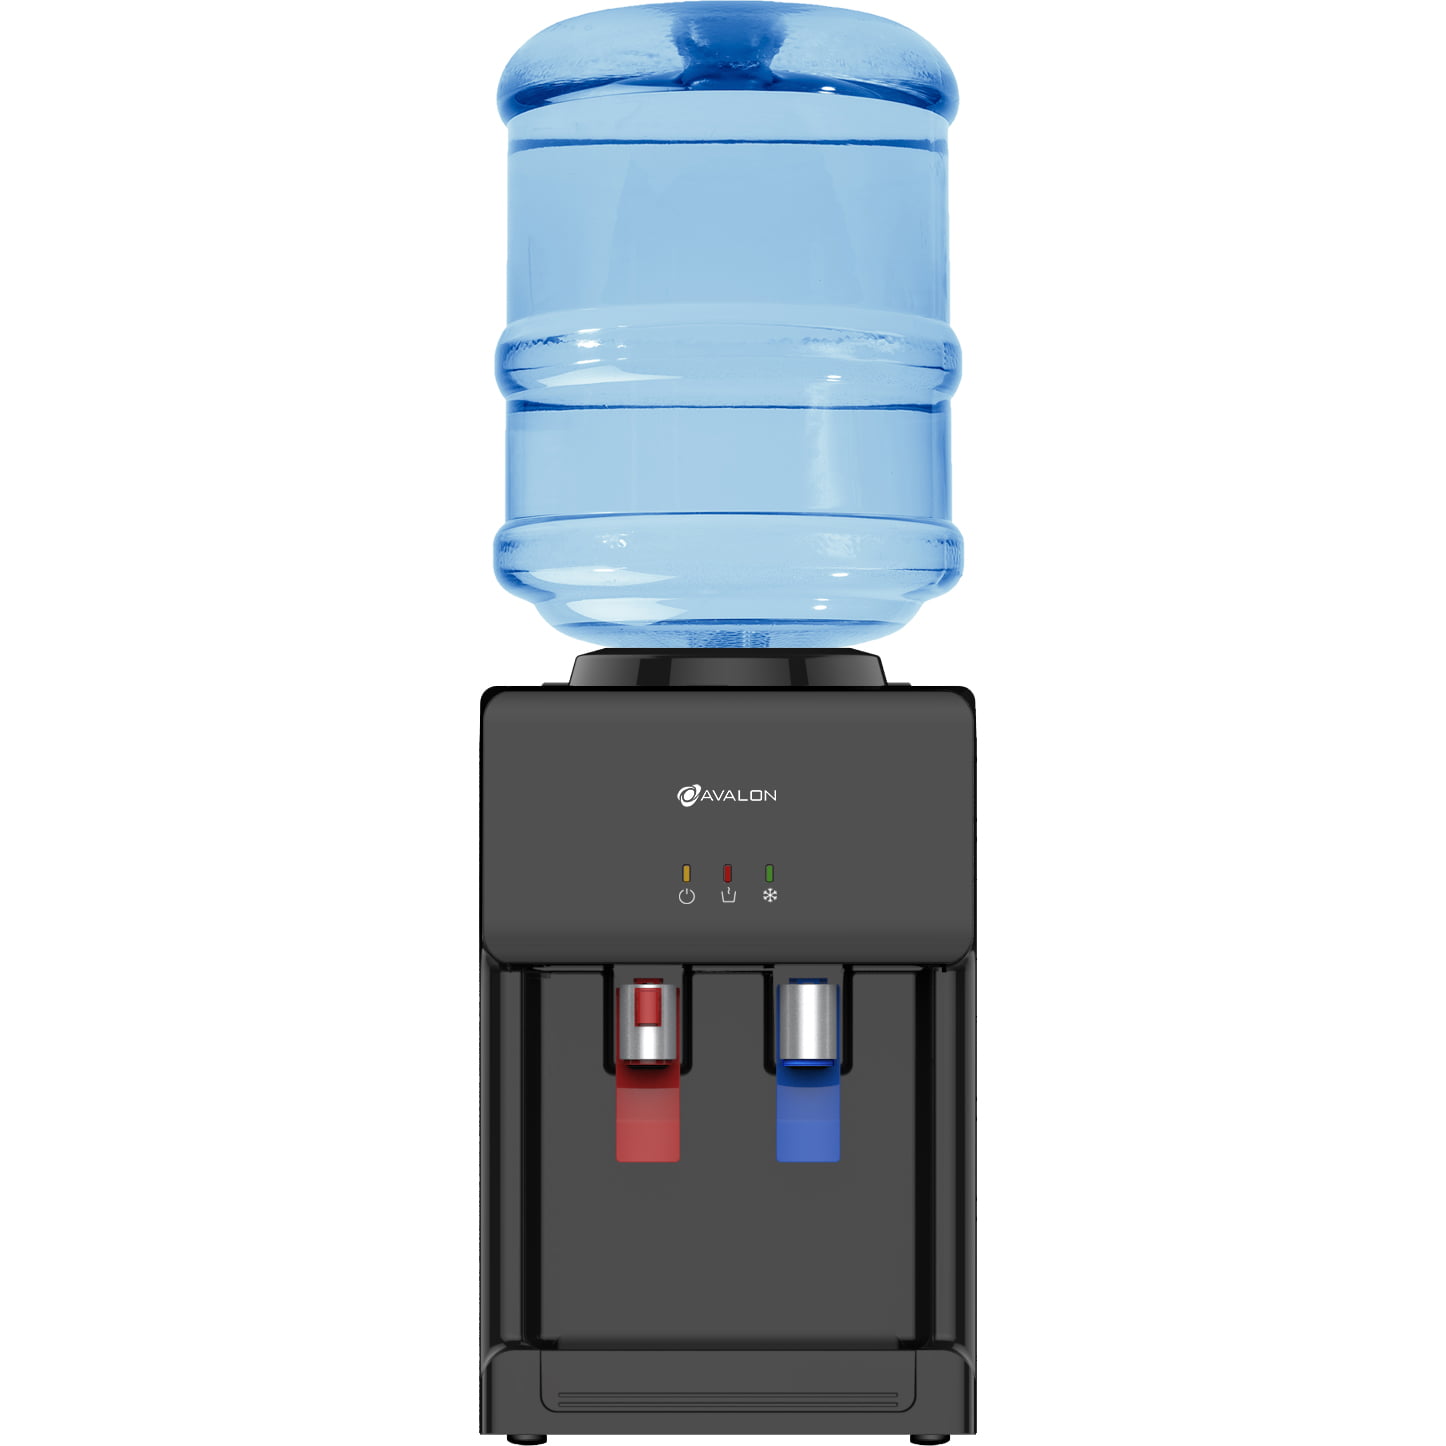 Drinking Water Cooler Dispenser Hot Cold Top Loading Countertop Gallon Bottle EBay